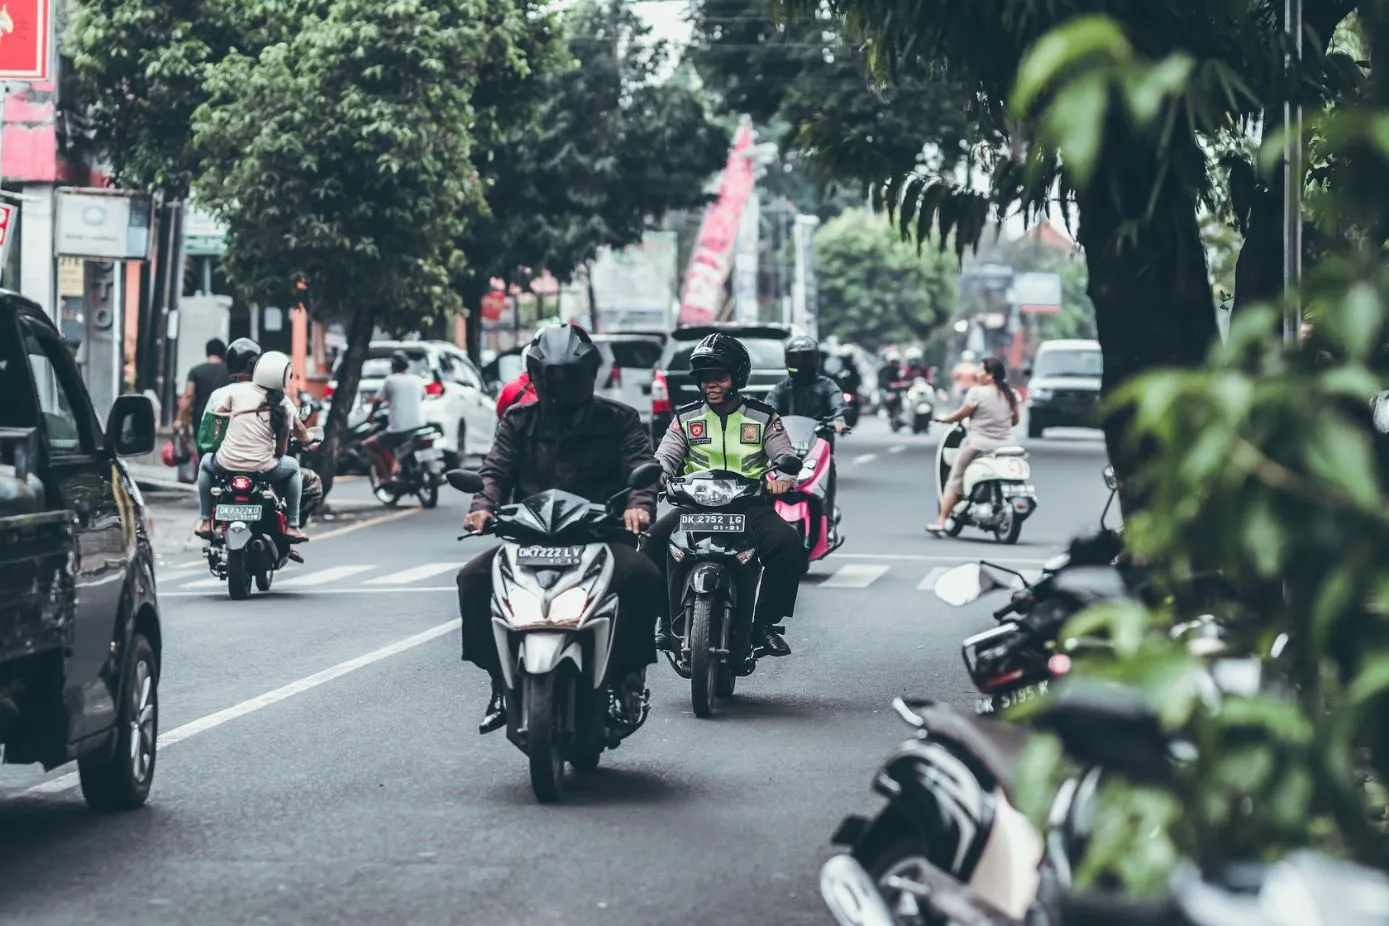 Bali traffic